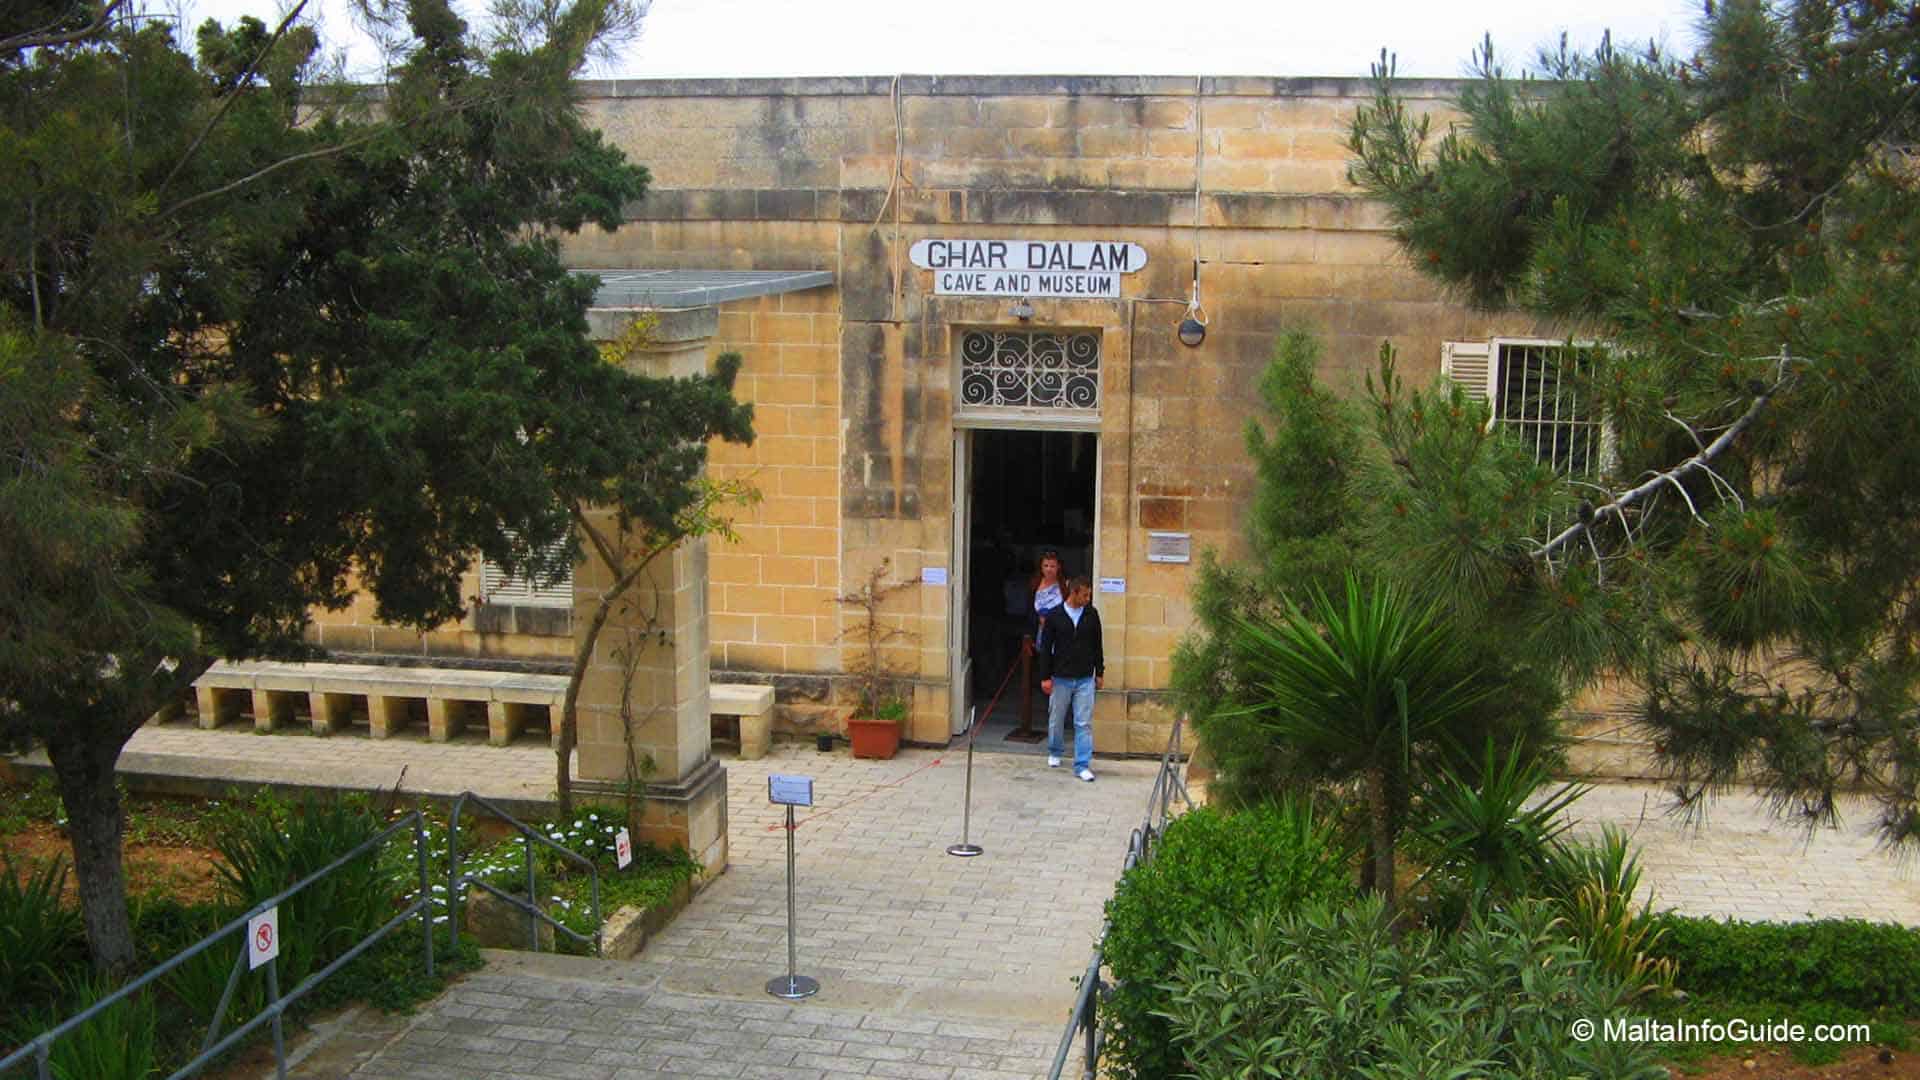 Ghar Dalam cave and museum entrance